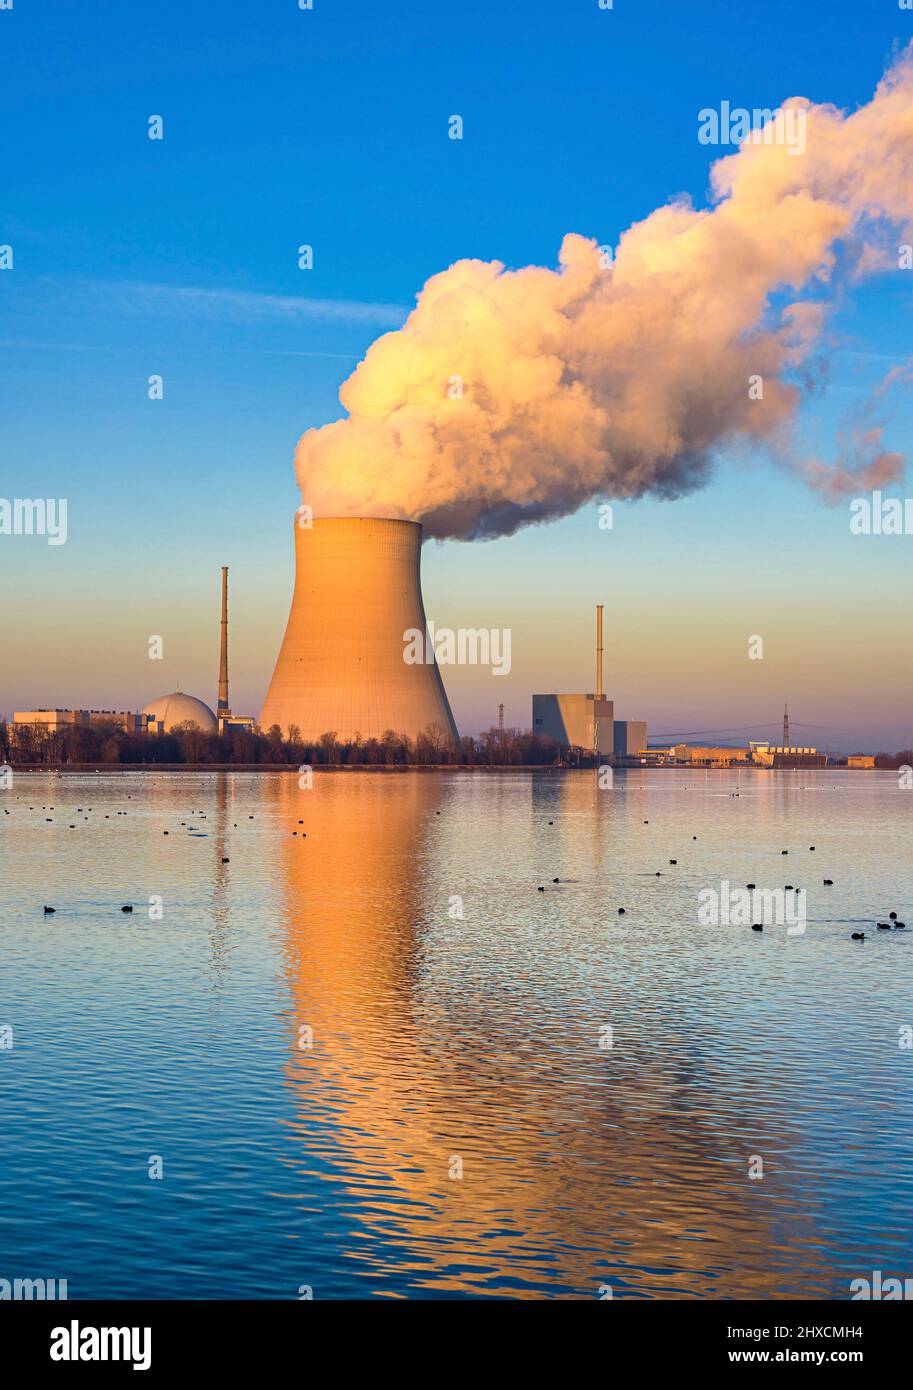 Isar 2 nuclear power plant, Ohu, near Landshut, Bavaria, Germany, Europe Stock Photo